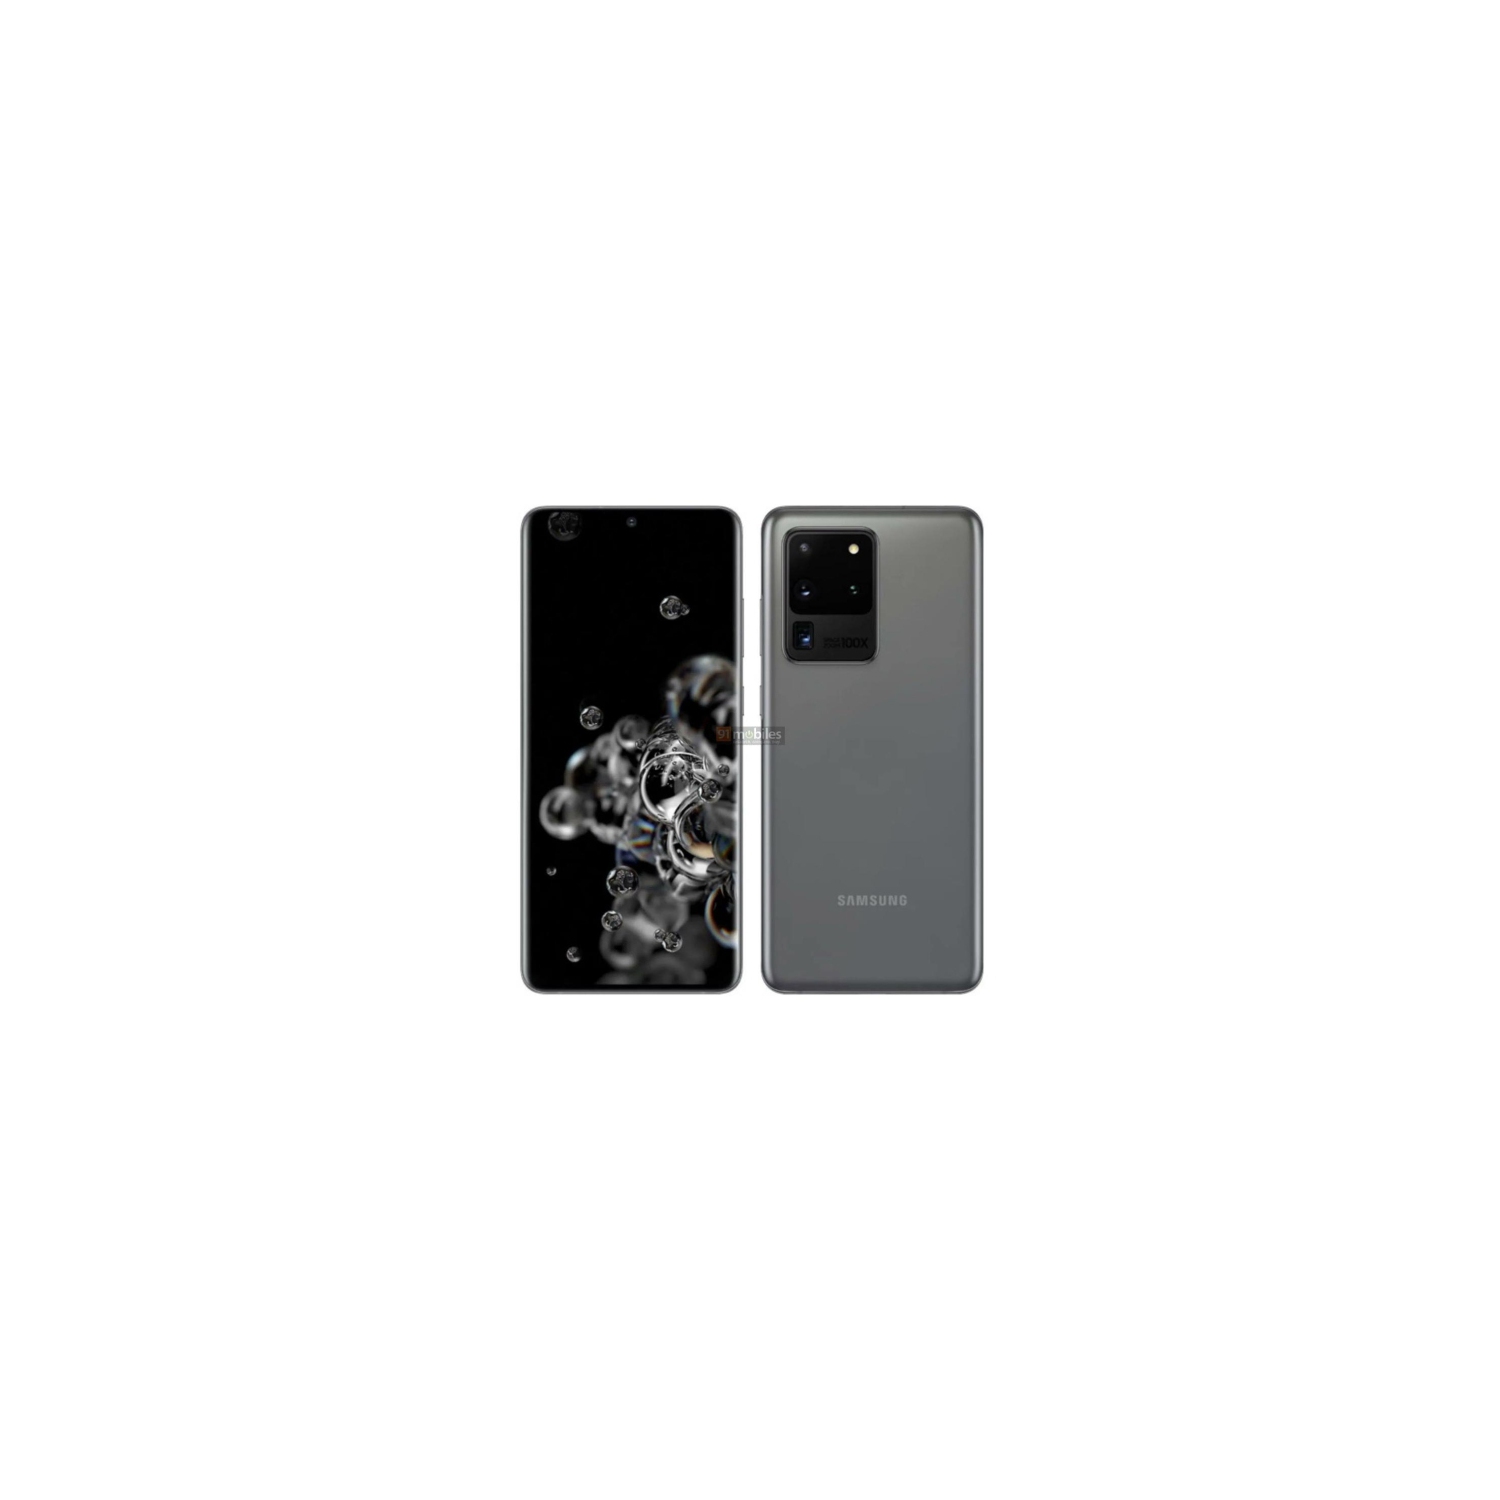 Samsung Galaxy S20+ (Plus) 5G 128GB Smartphone - Cosmic Gray - Unlocked - Open Box